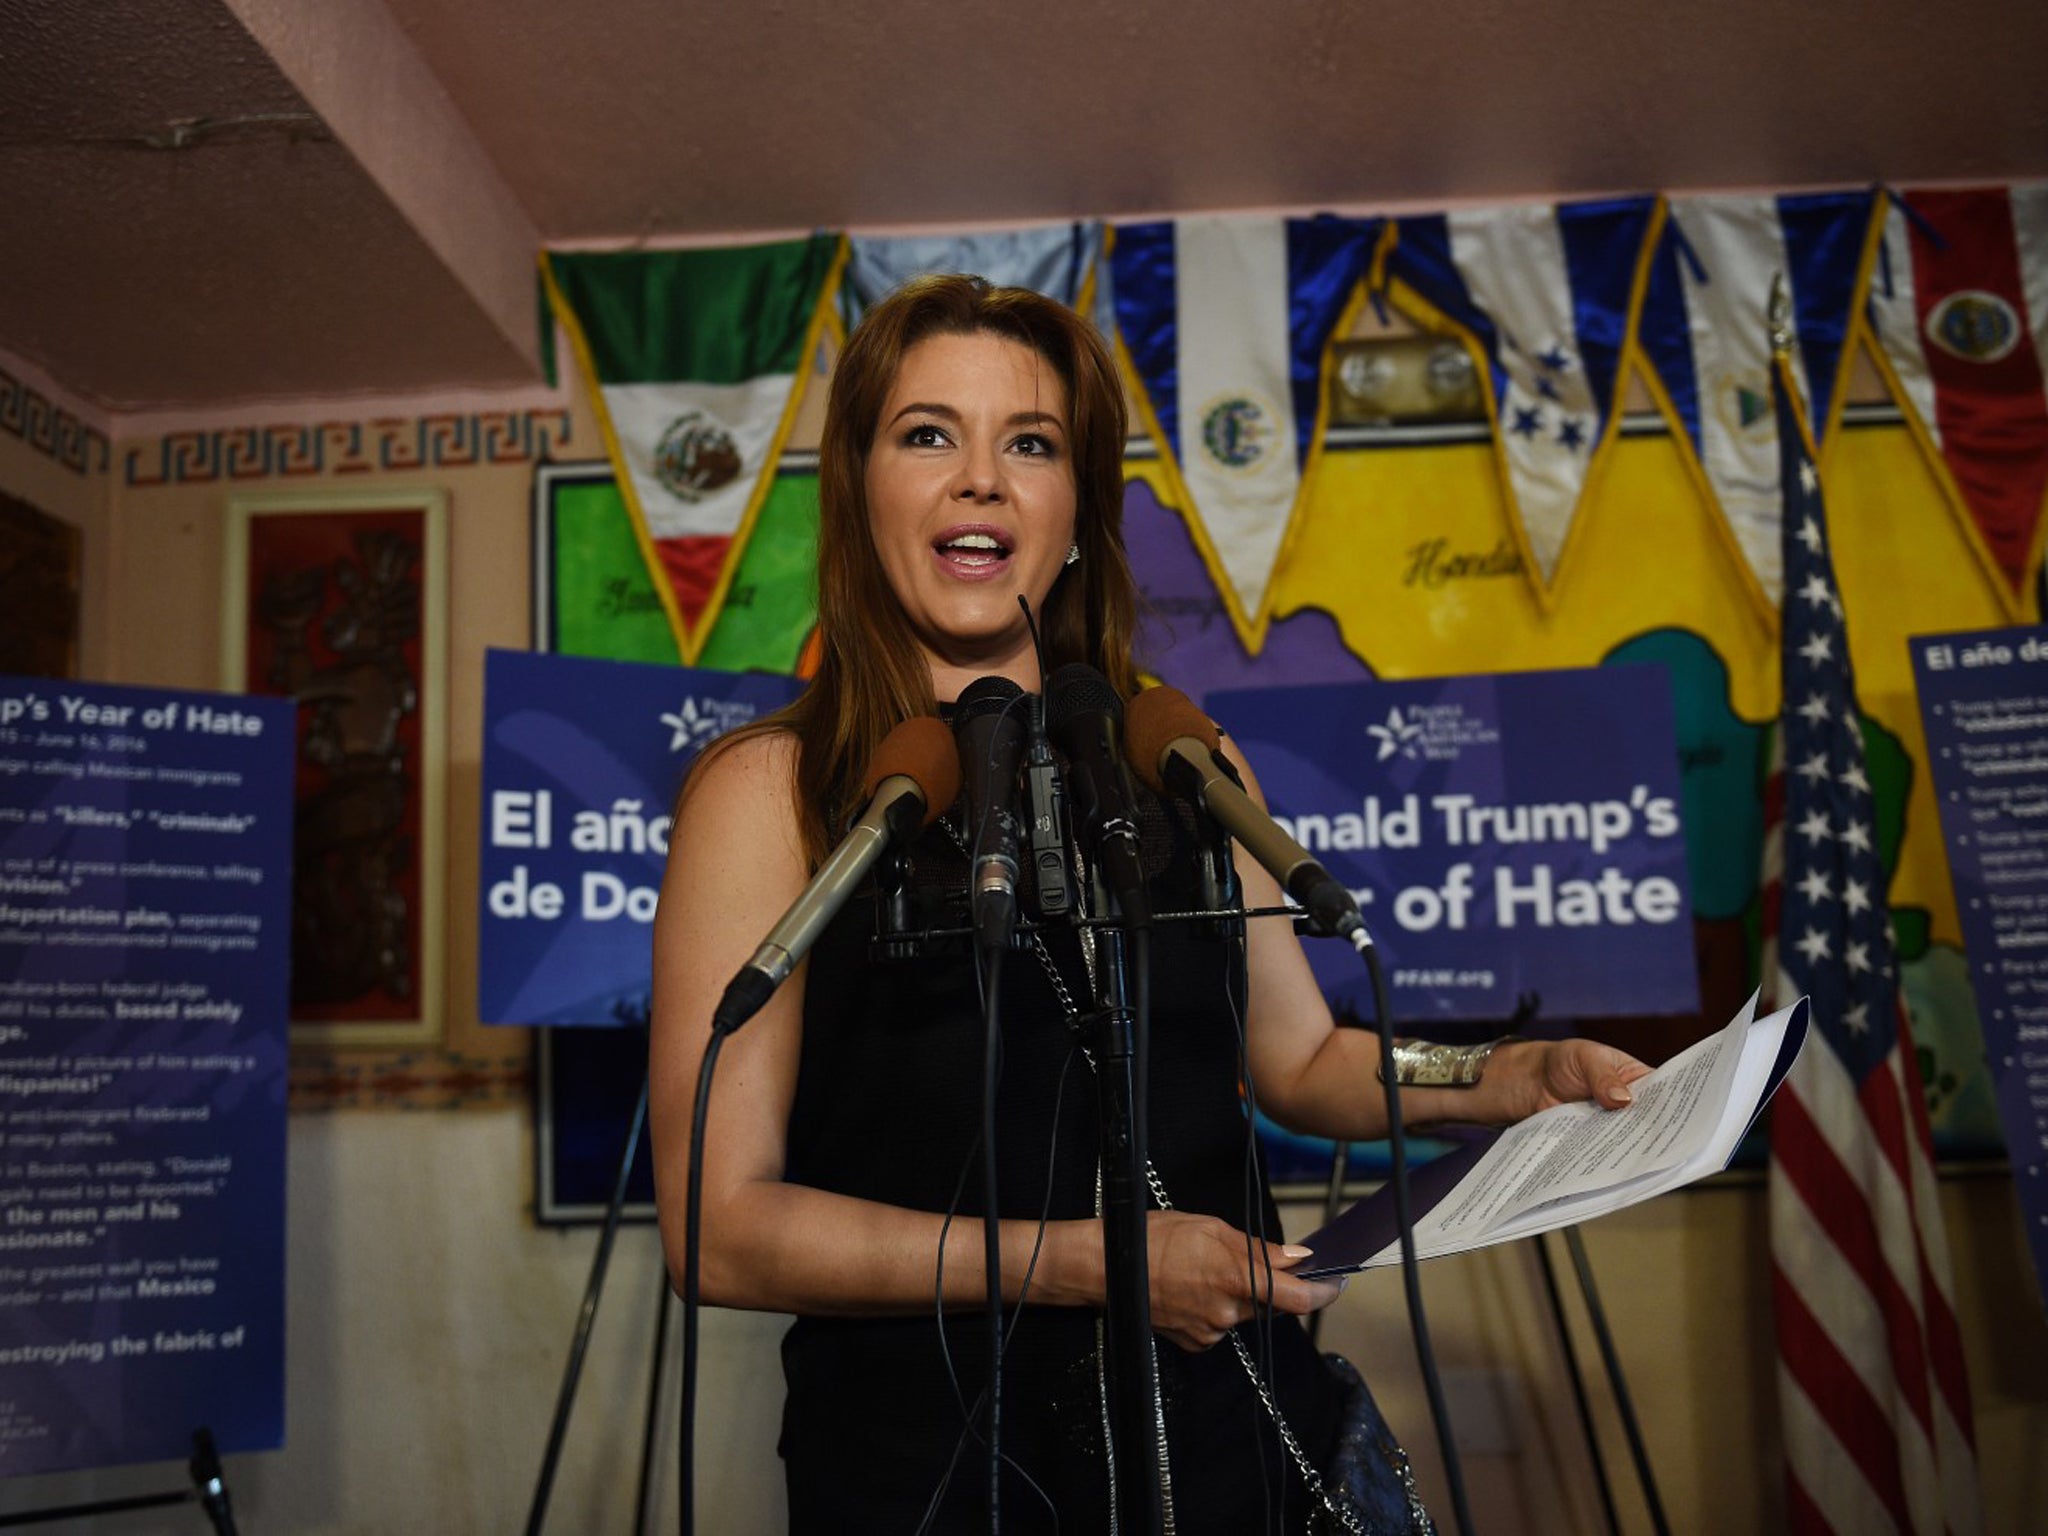 Alicia Machado campaigning against Donald Trump earlier this year